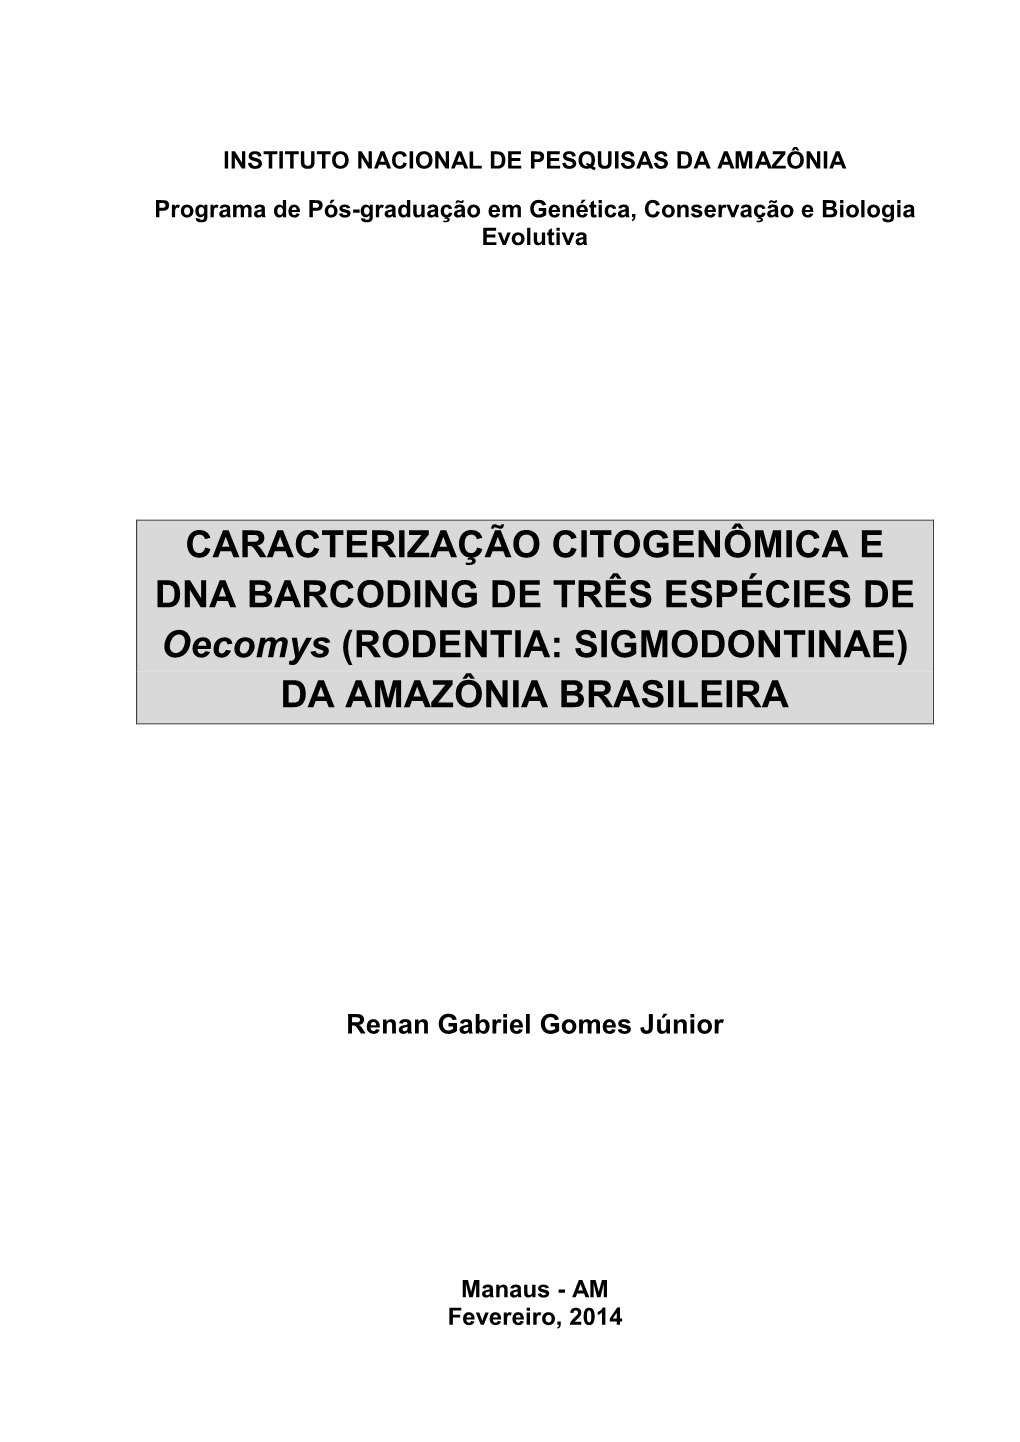 Oecomys (RODENTIA: SIGMODONTINAE) DA AMAZÔNIA BRASILEIRA